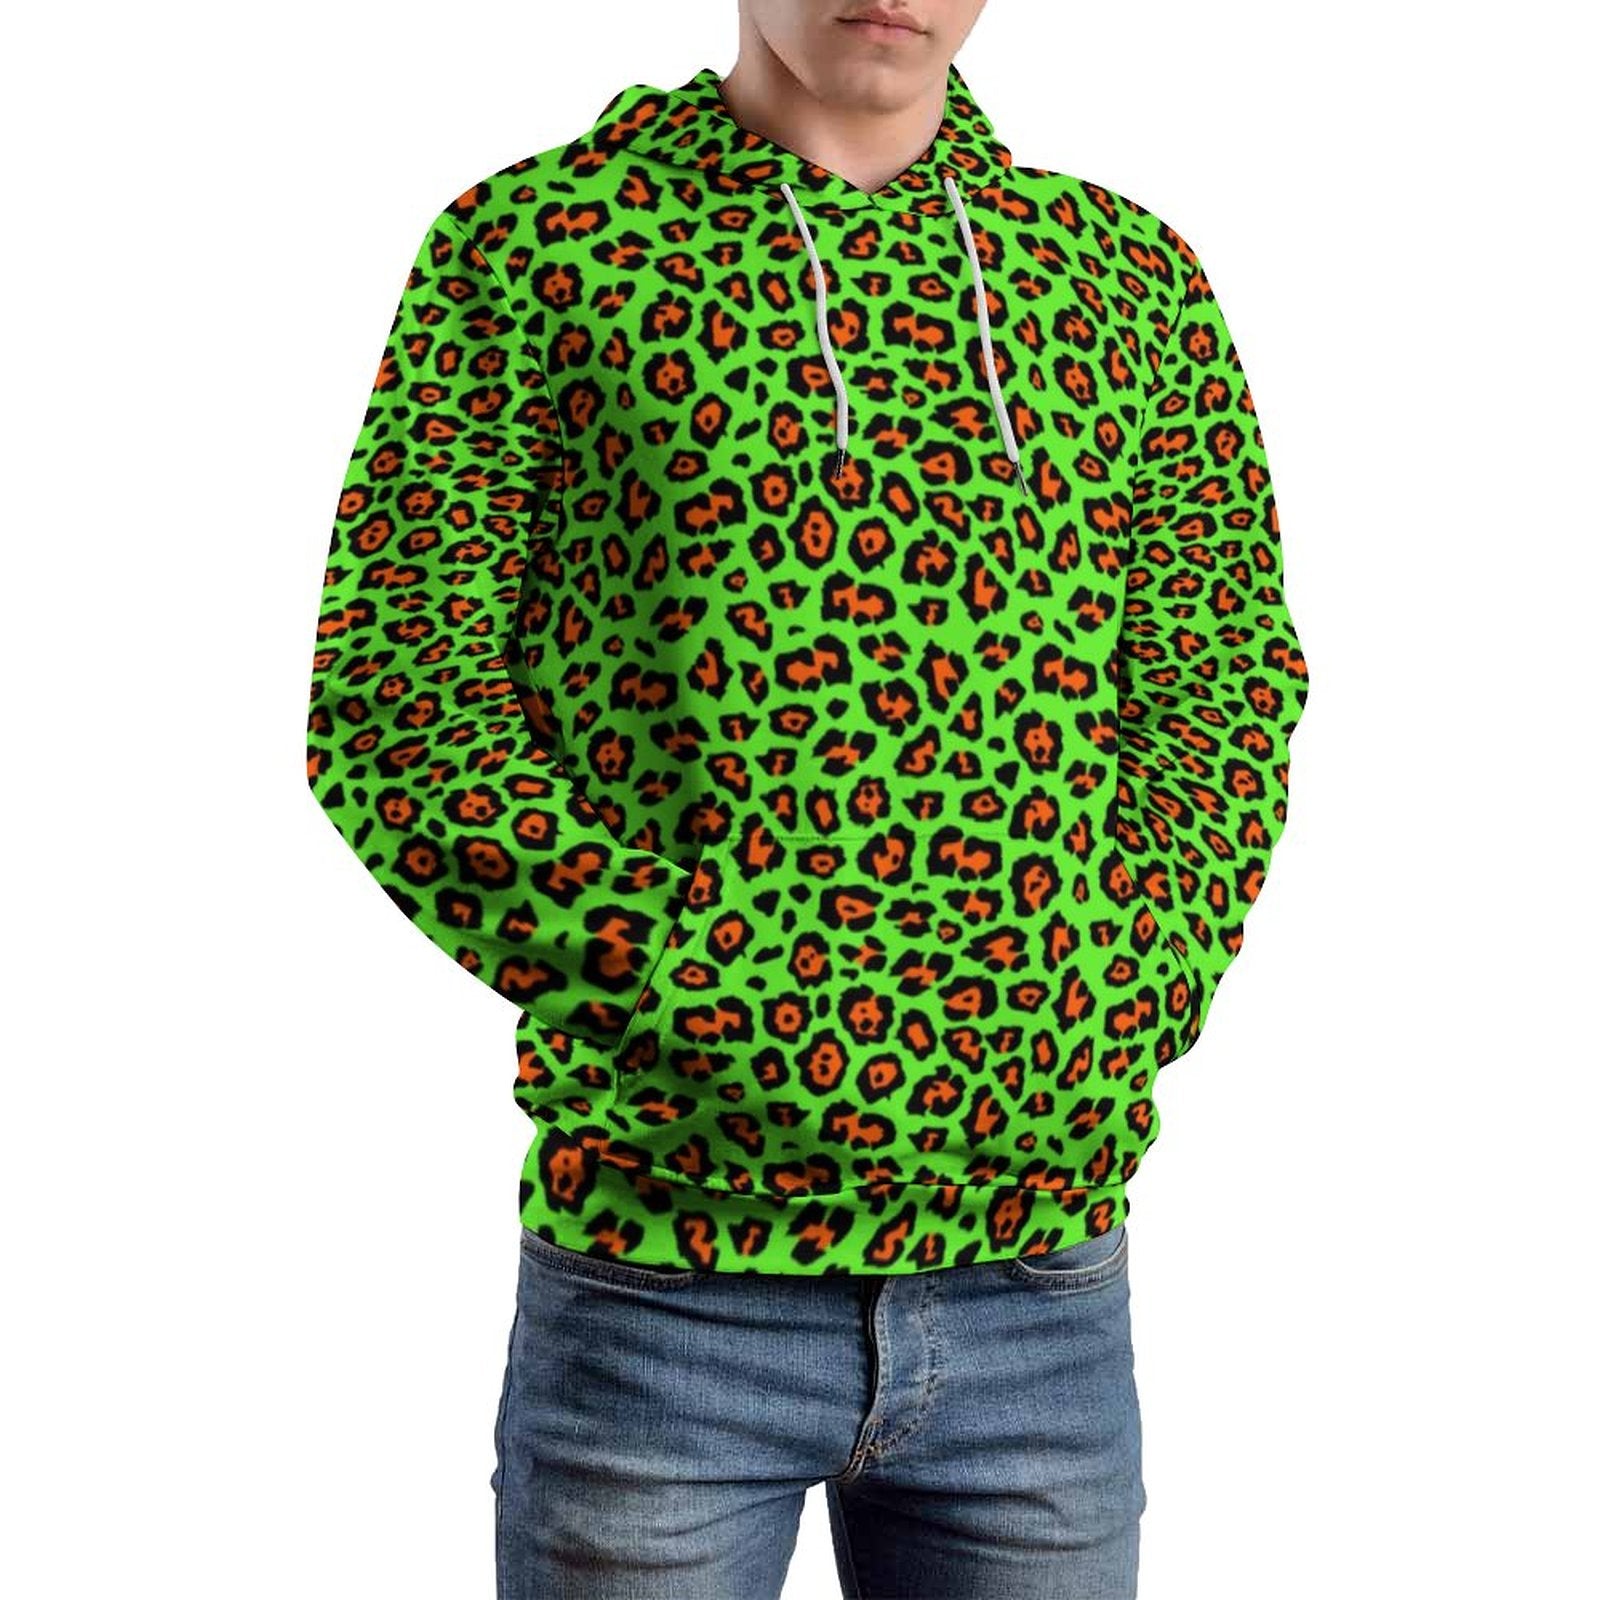 Animal Print Casual Hoodies Man Tiger Stripe Winter Long Sleeve Y2k Pattern Clothes